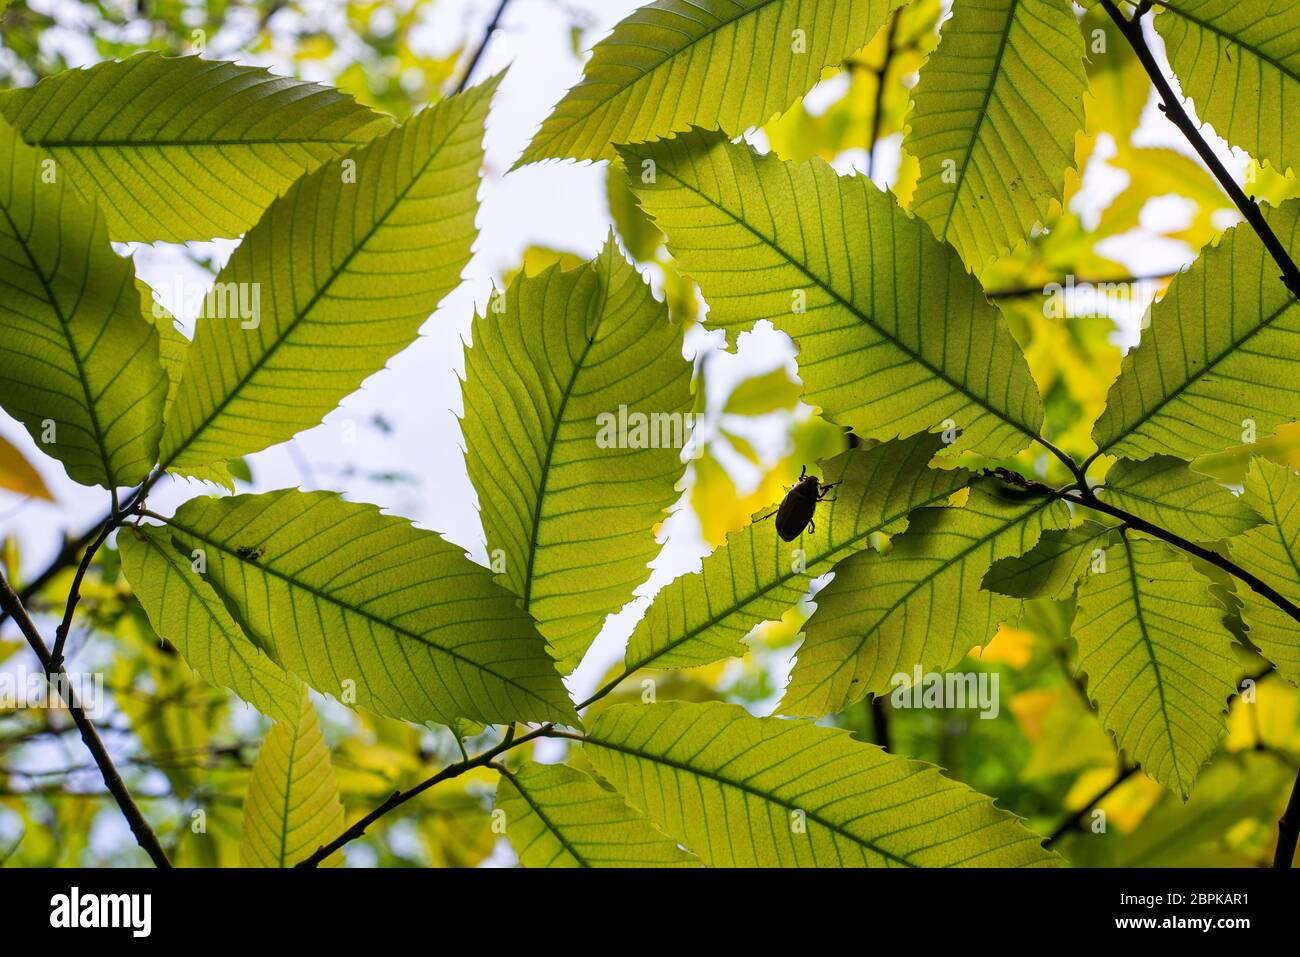 beetles eating leaves. scarabées mangeant des feuilles. Stock Photo